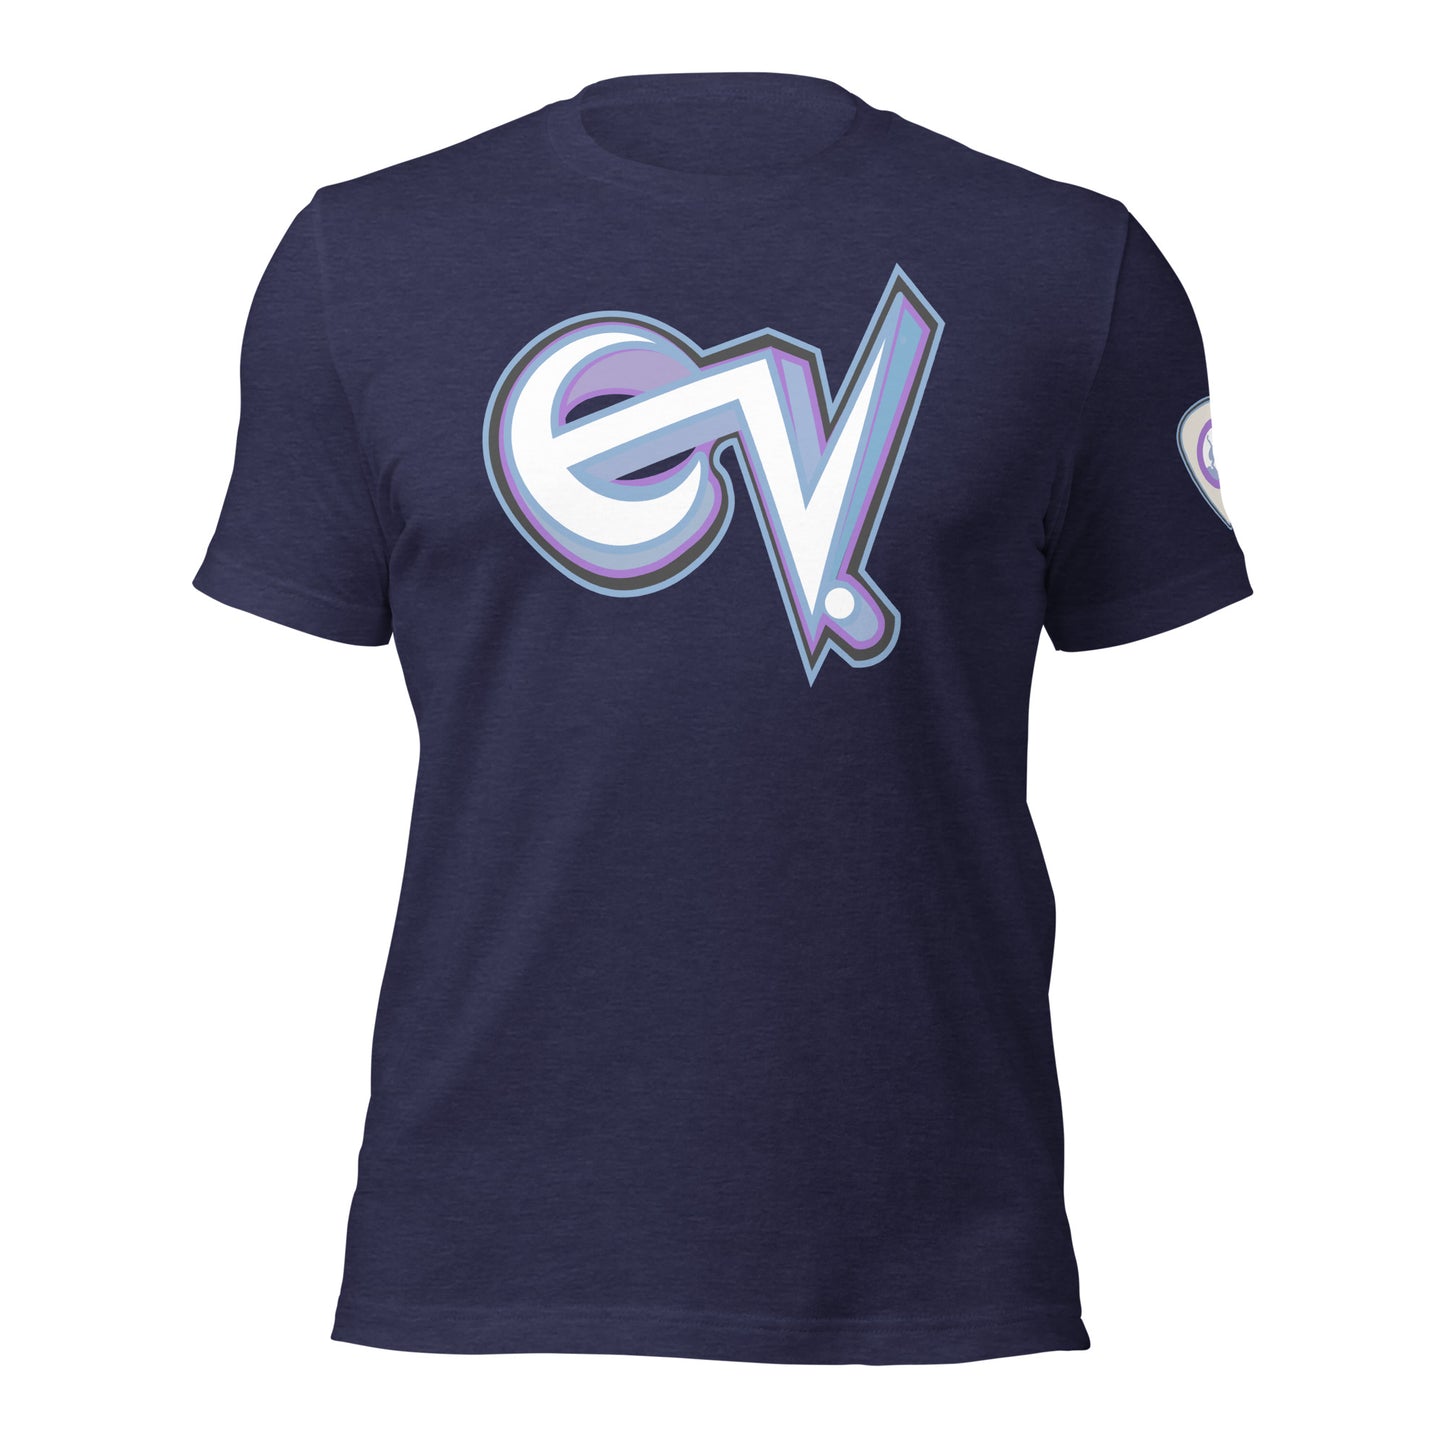 EV LOGO V1 / RIDE THE WAVE PICK ON SLEEVE - BELLA CANVAS - Unisex t-shirt